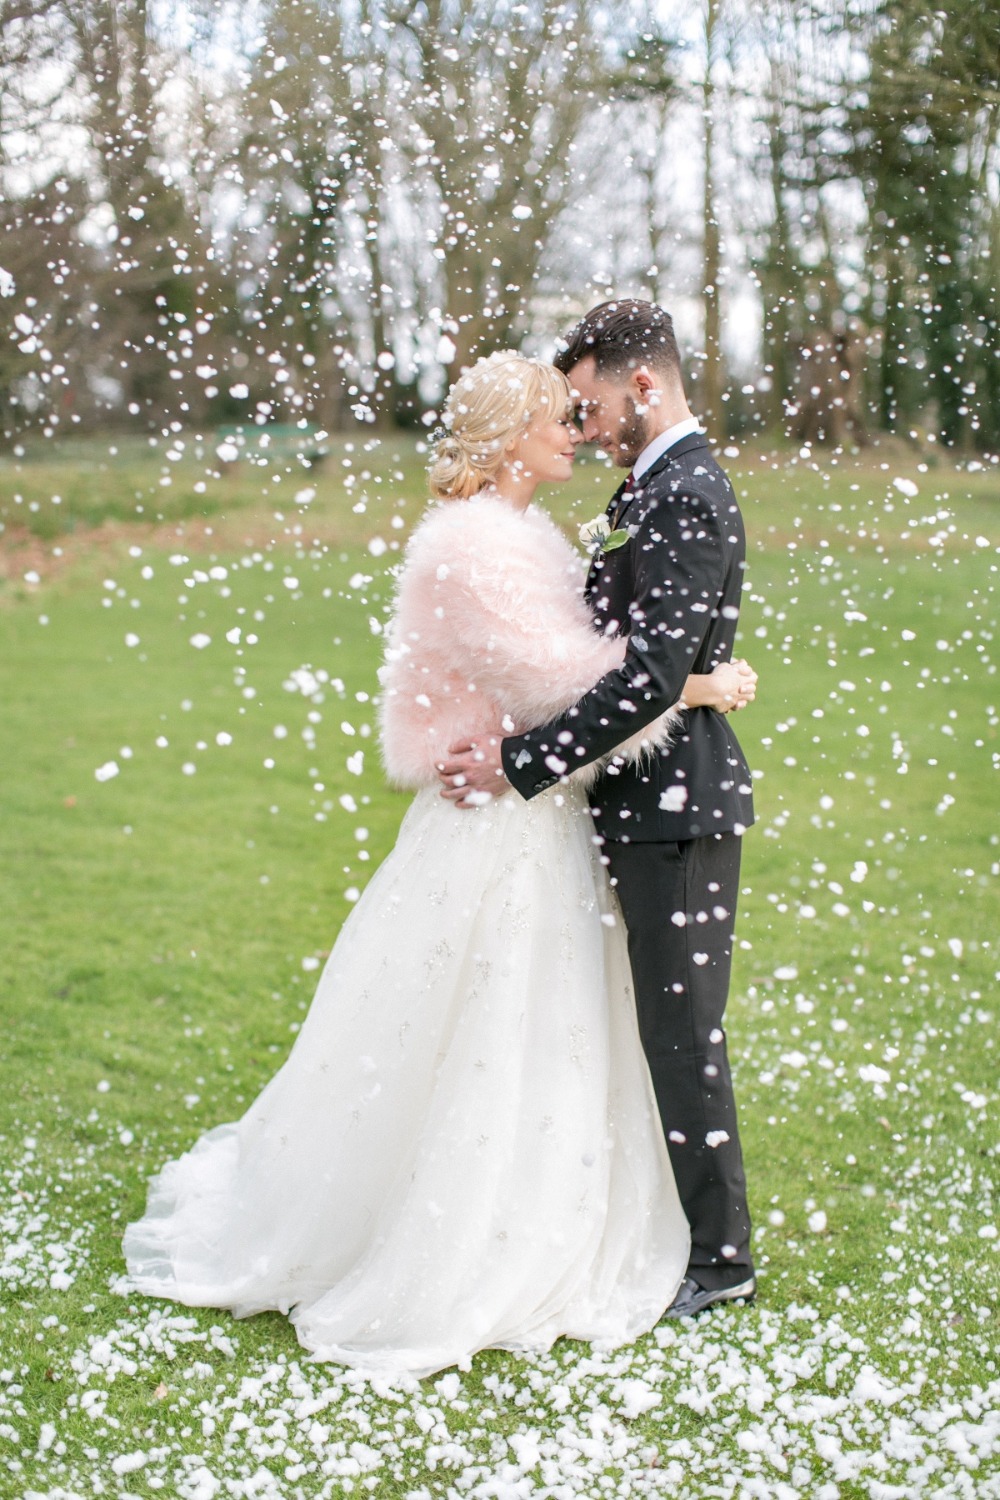 Snowy wedding inspiration